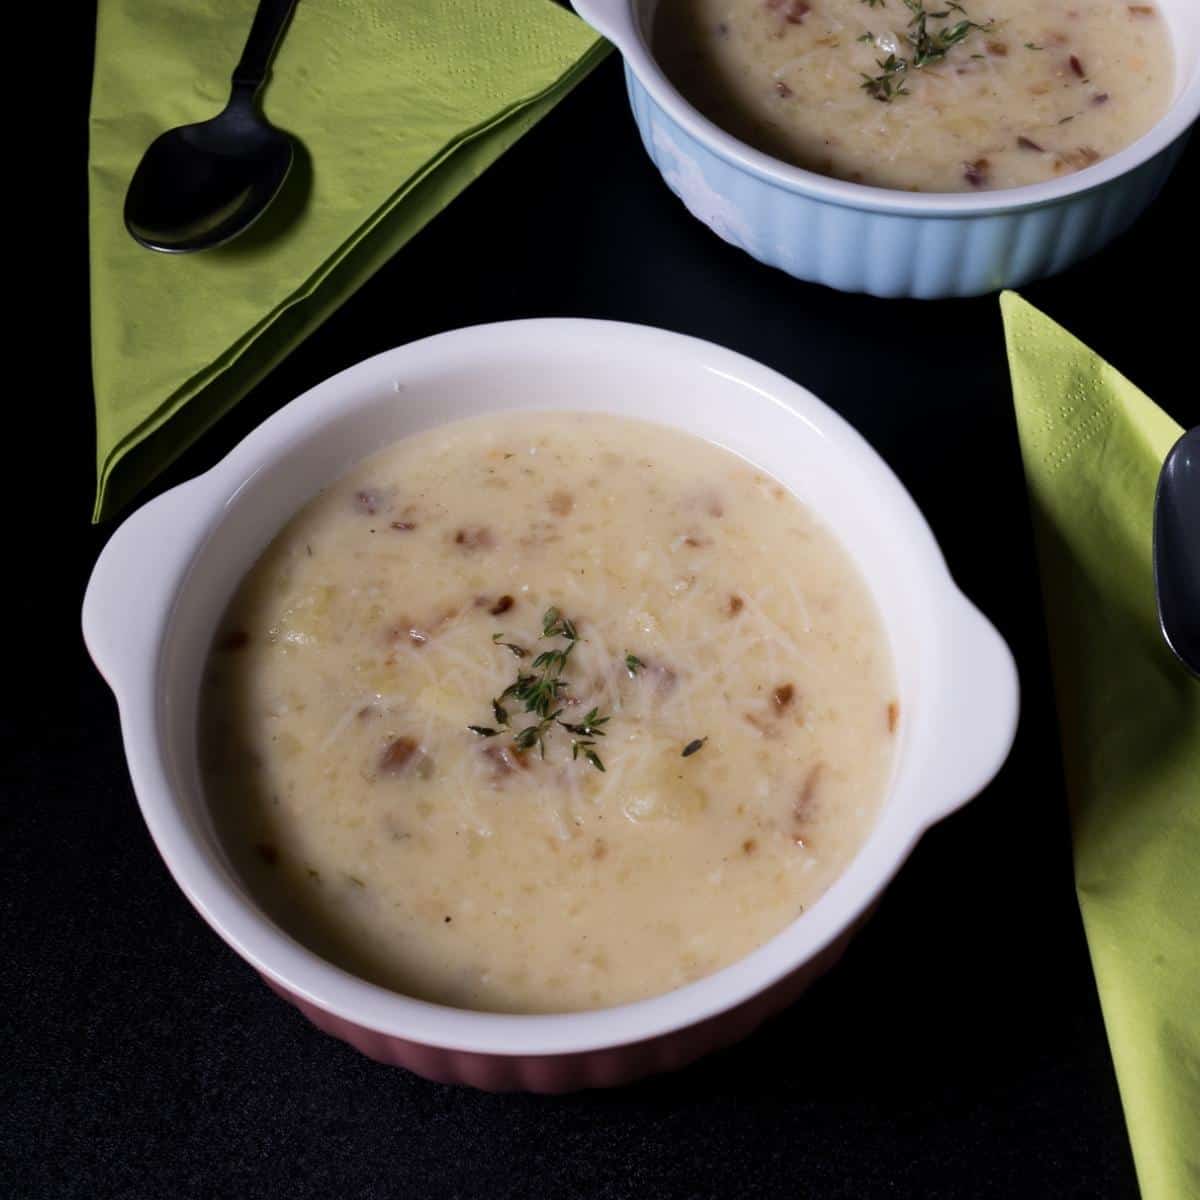 A bowl of potato soup.